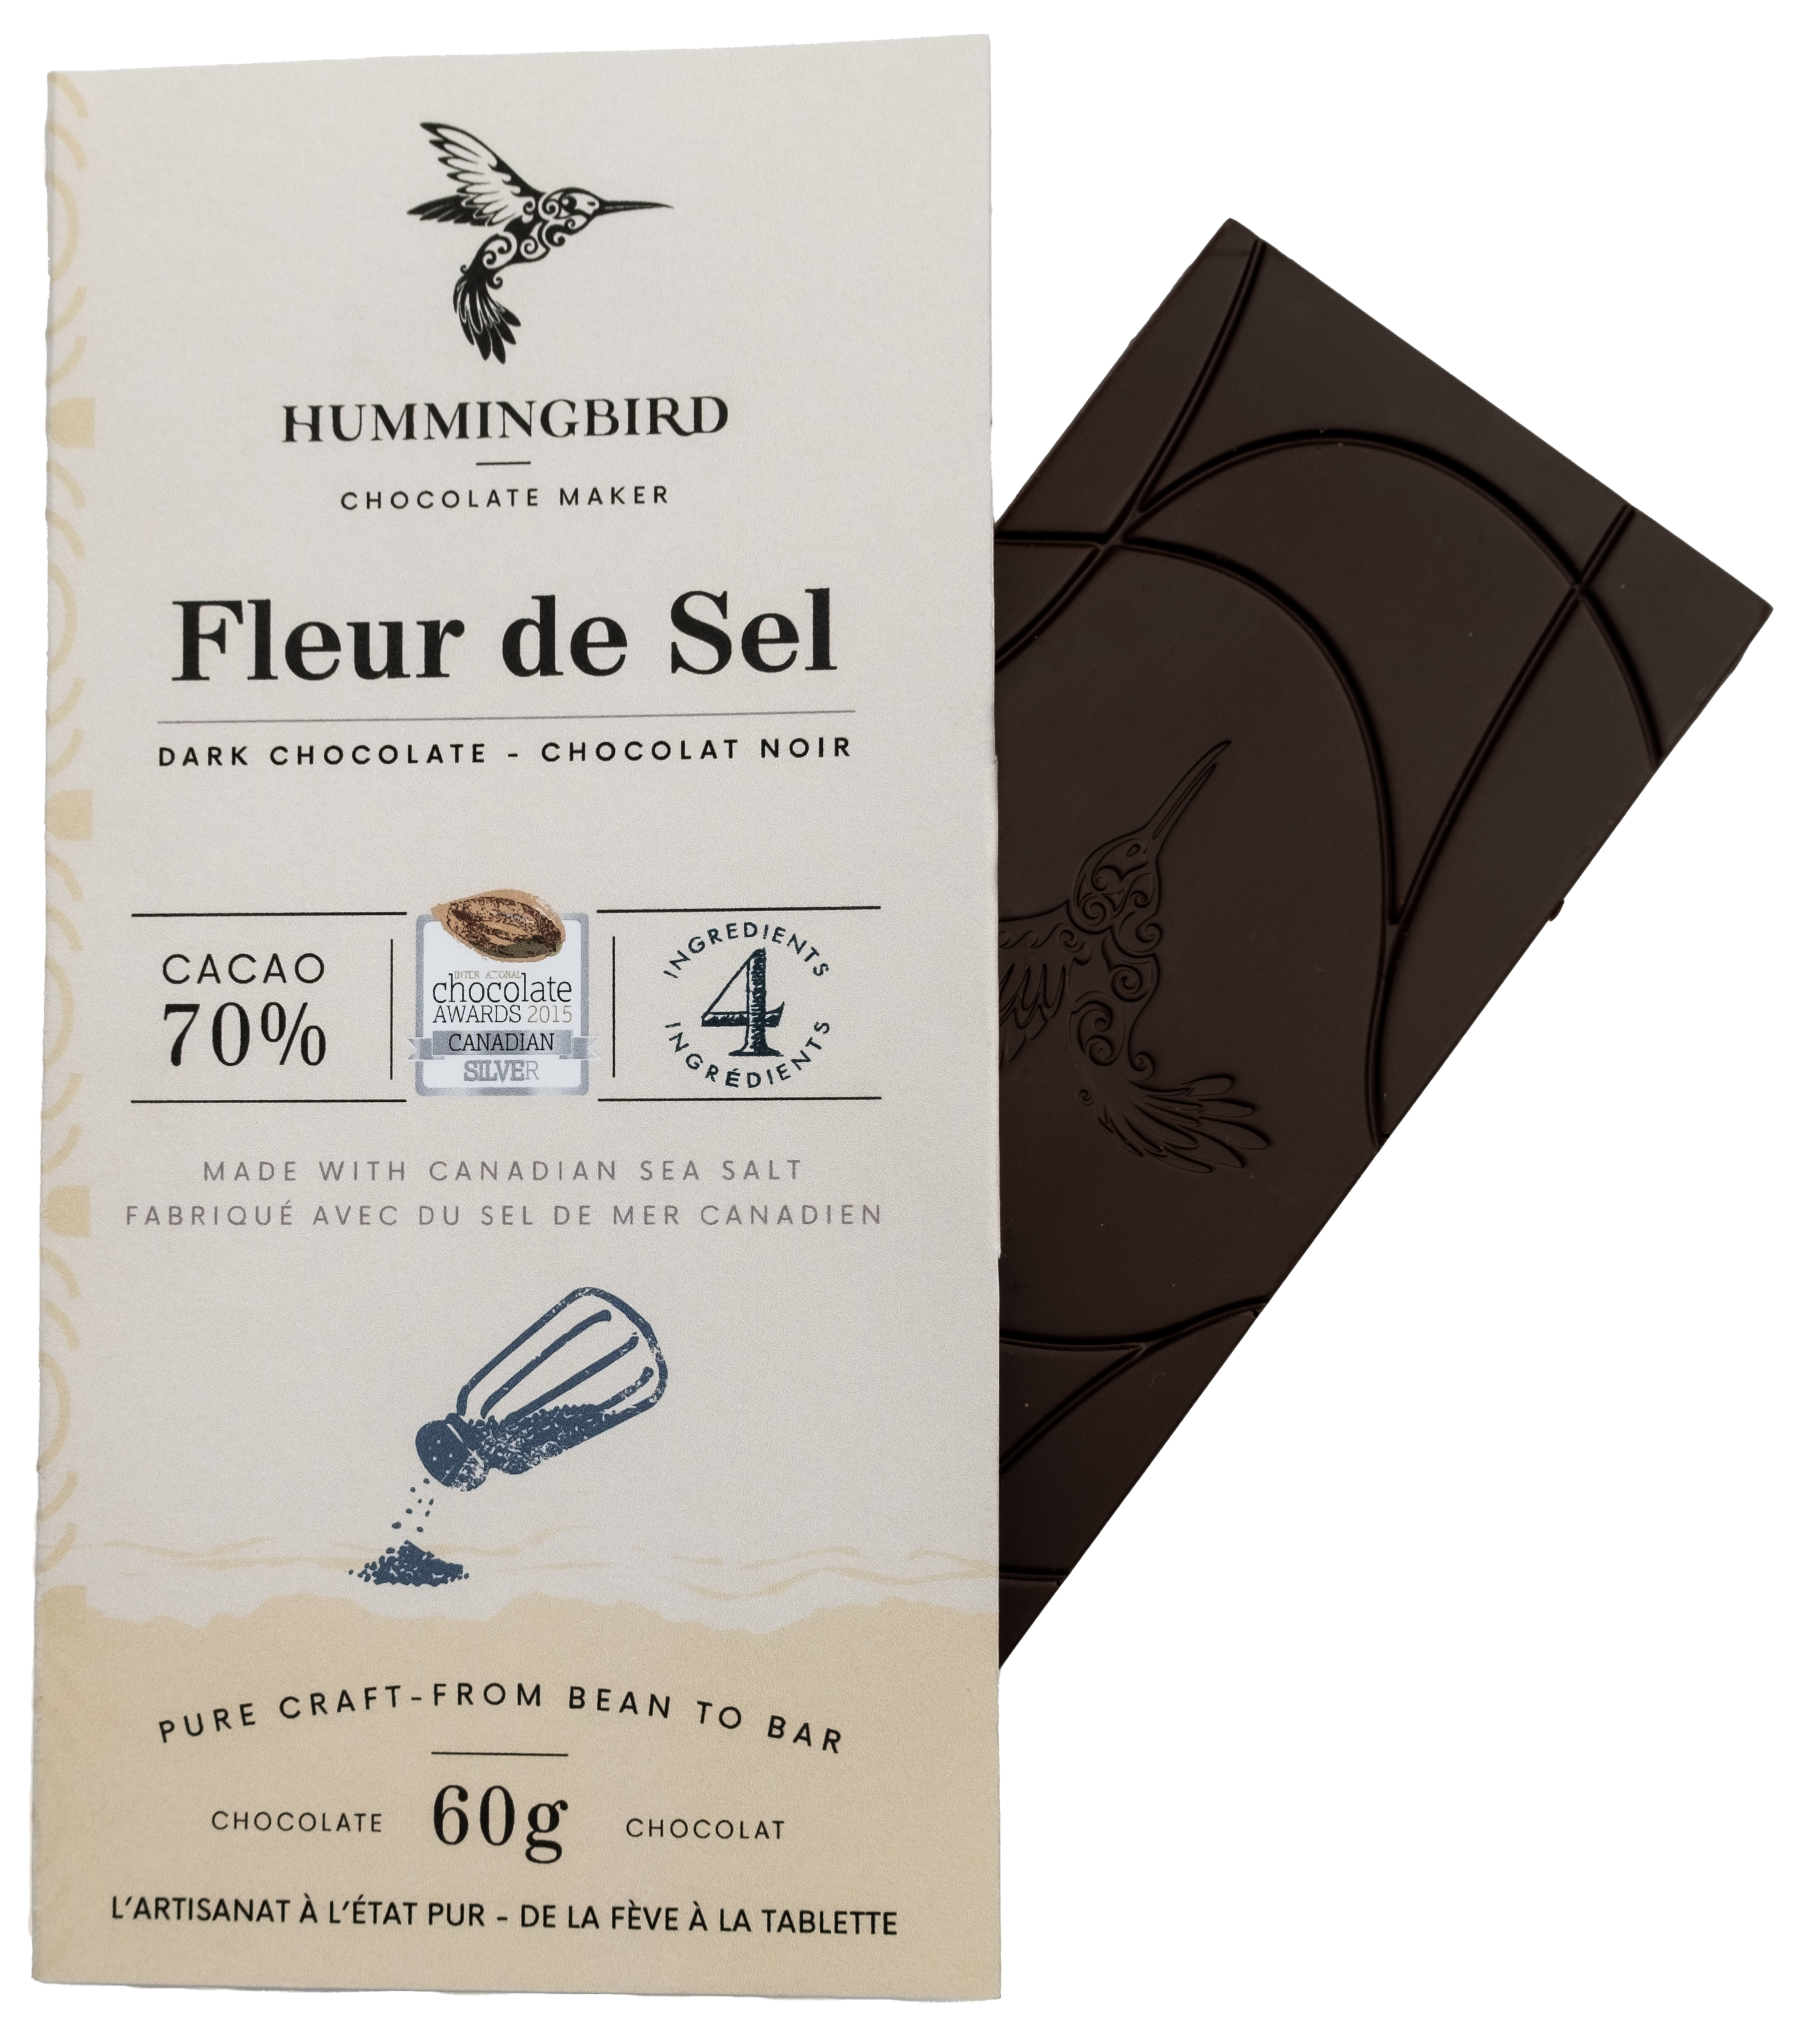 Hummingbird Chocolate Maker Fleur de Sel 70% Dark Chocolate Bar